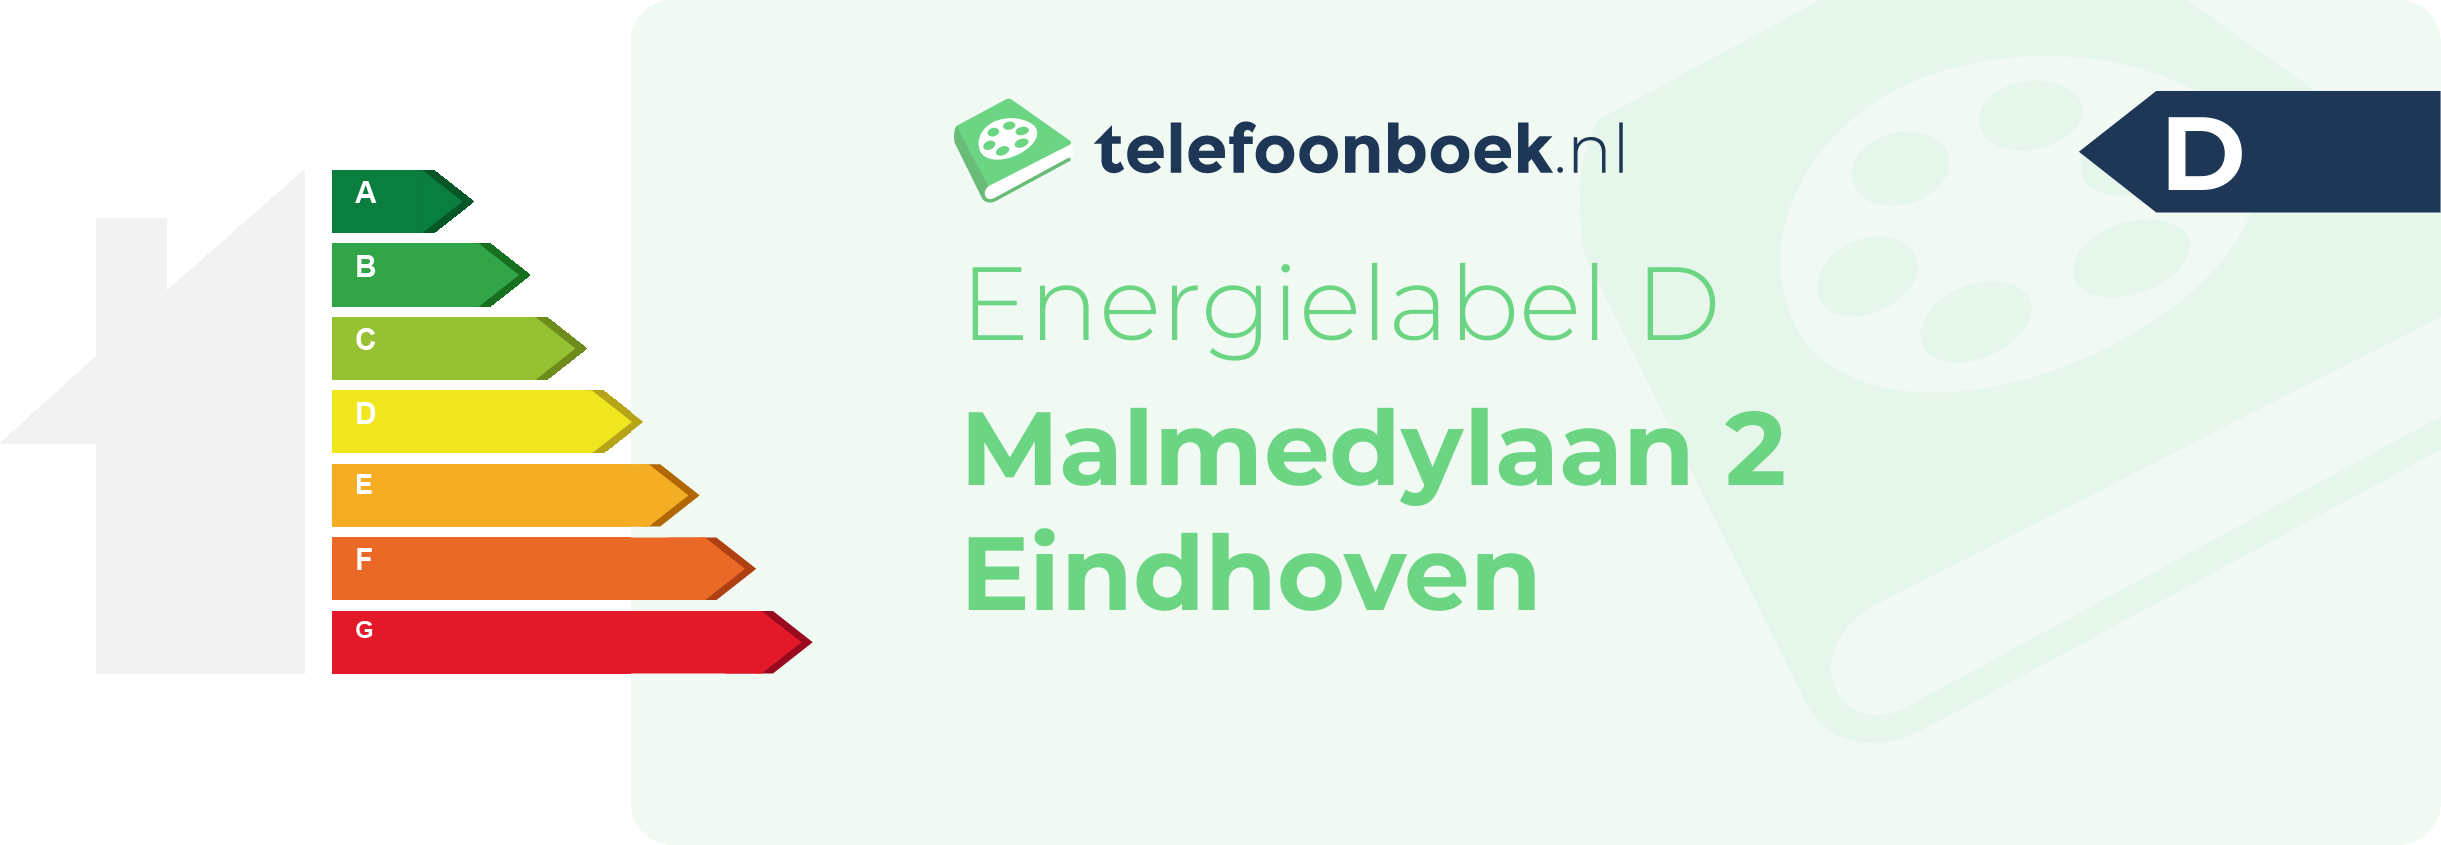 Energielabel Malmedylaan 2 Eindhoven